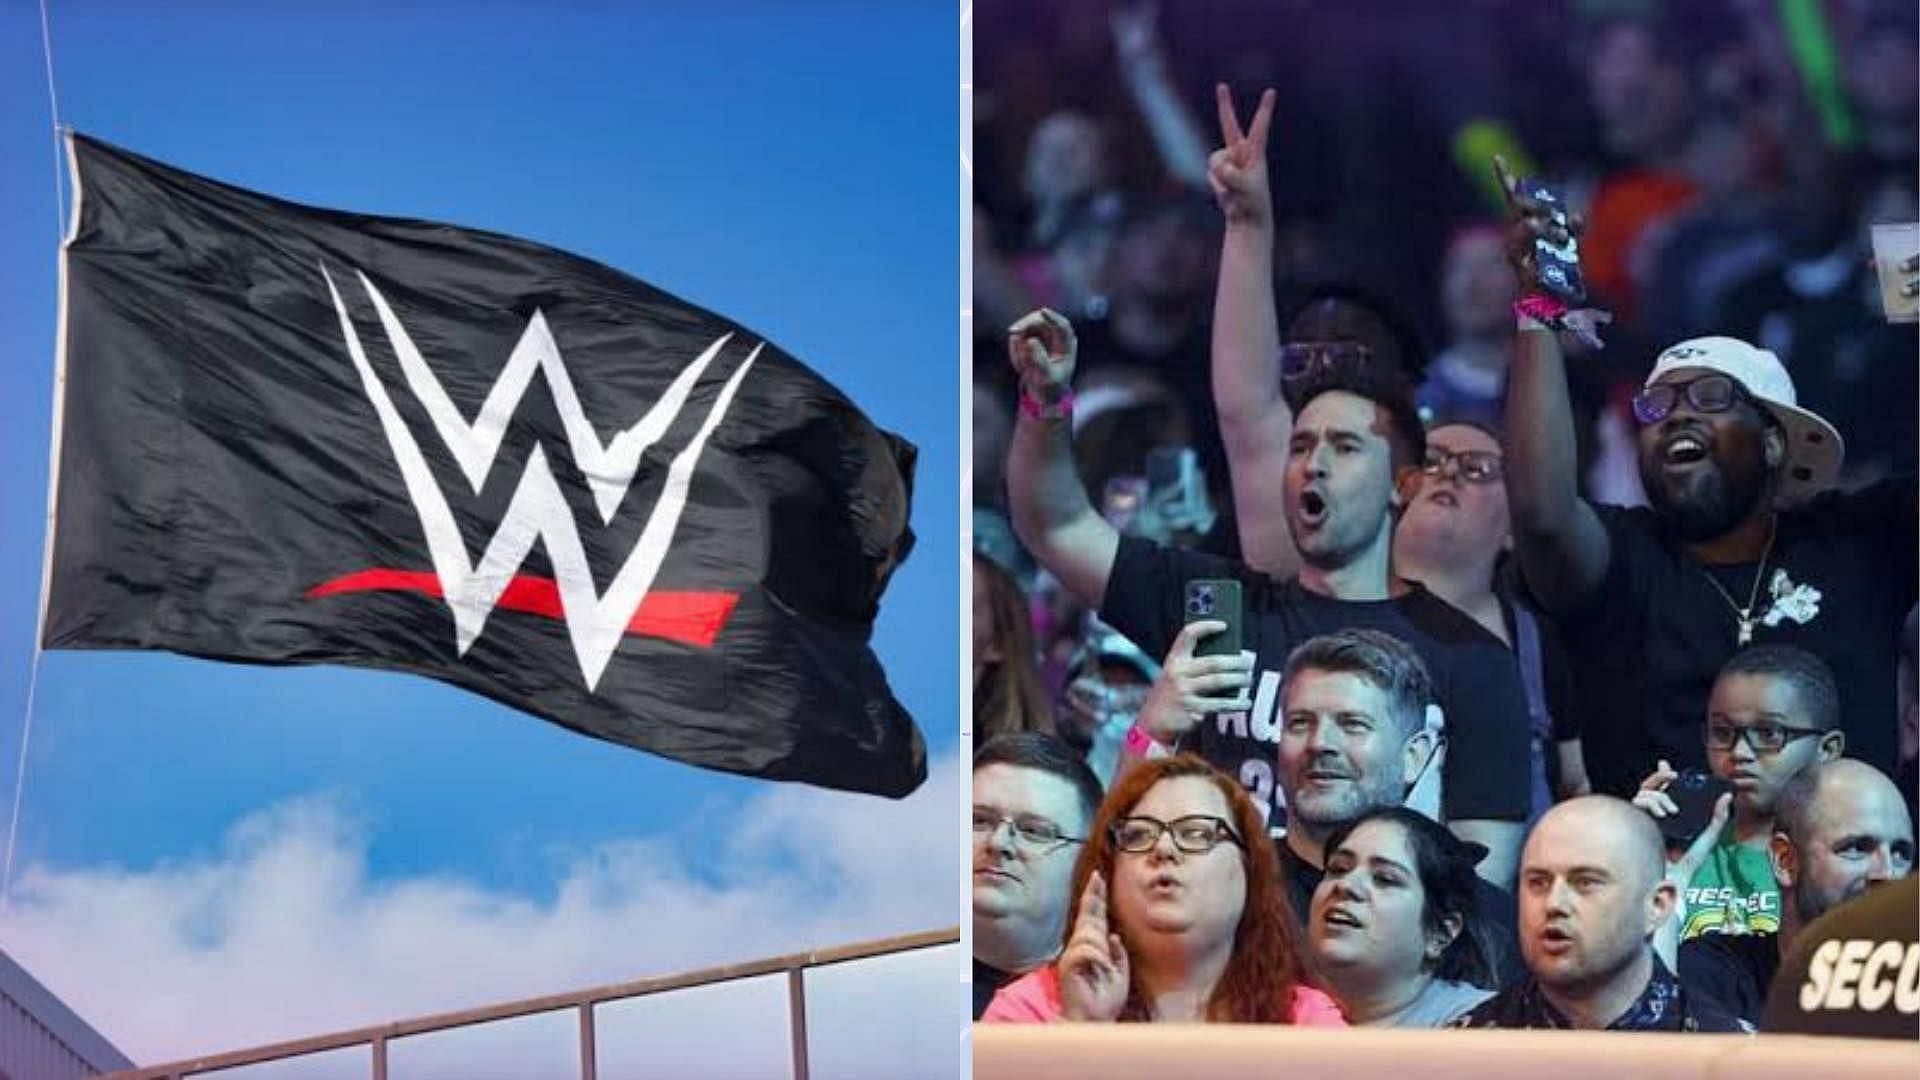 A legendary WWE star has turned up suddenly